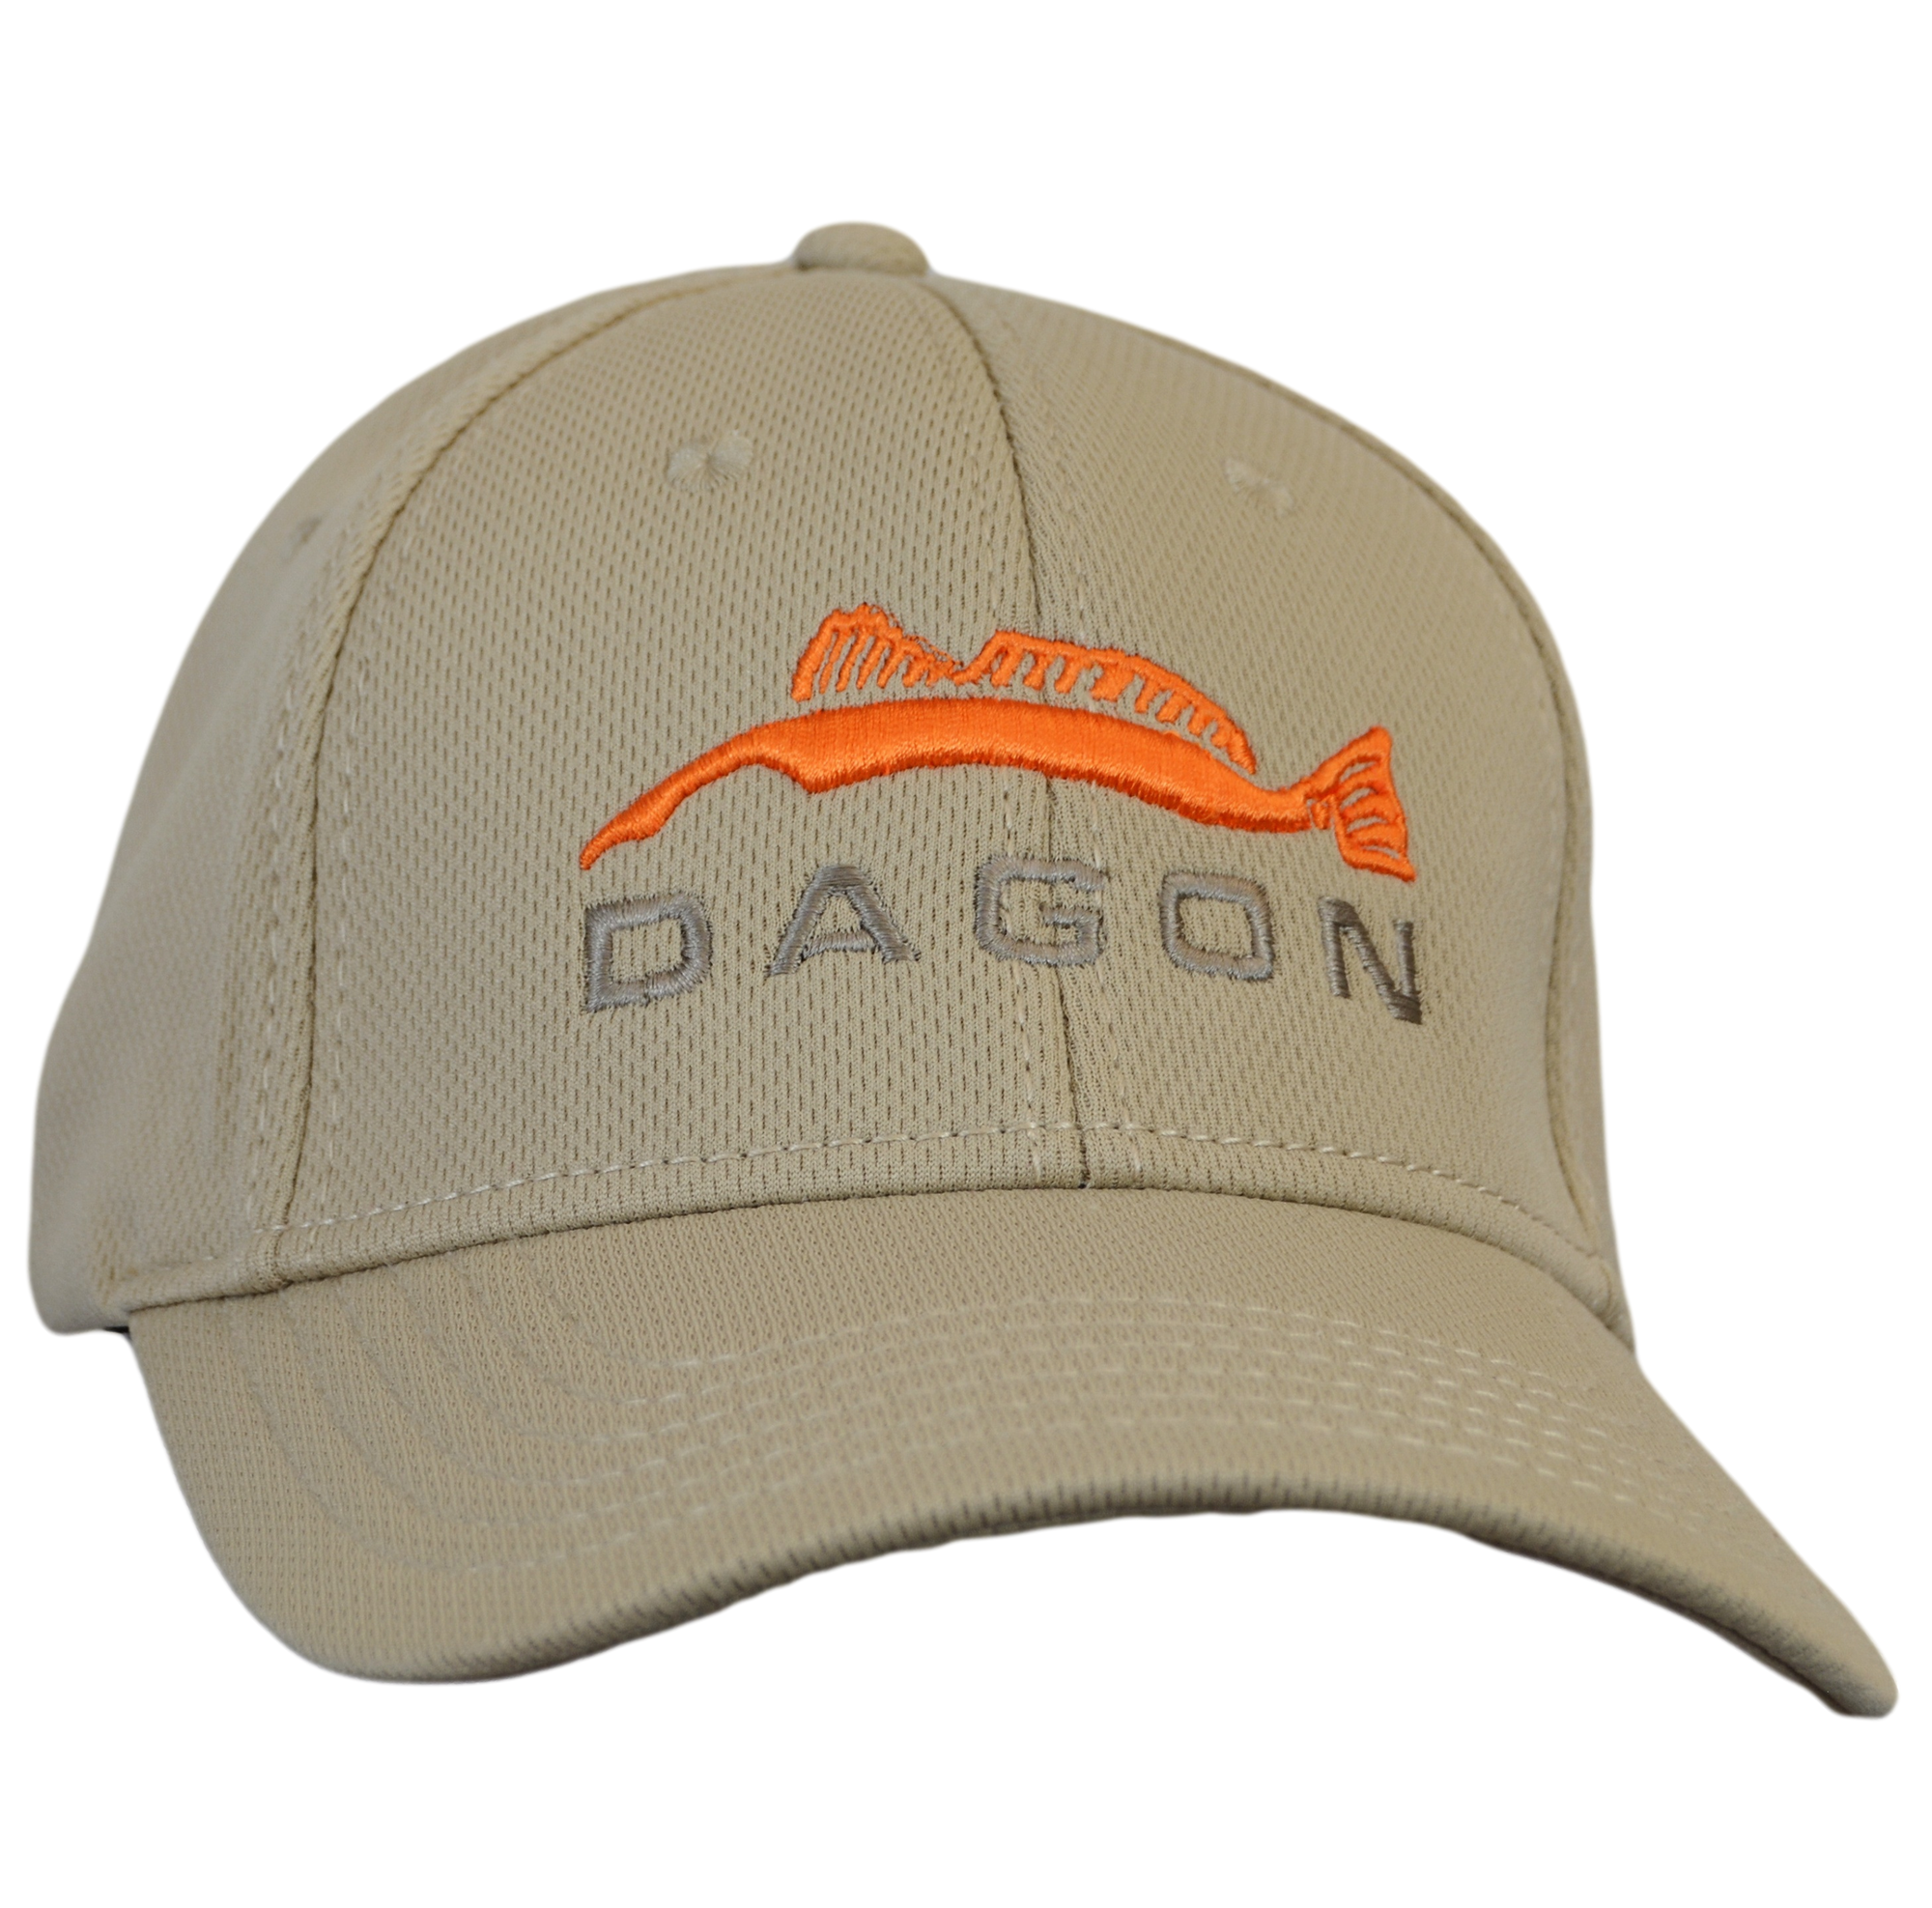 Tan Dagon hat